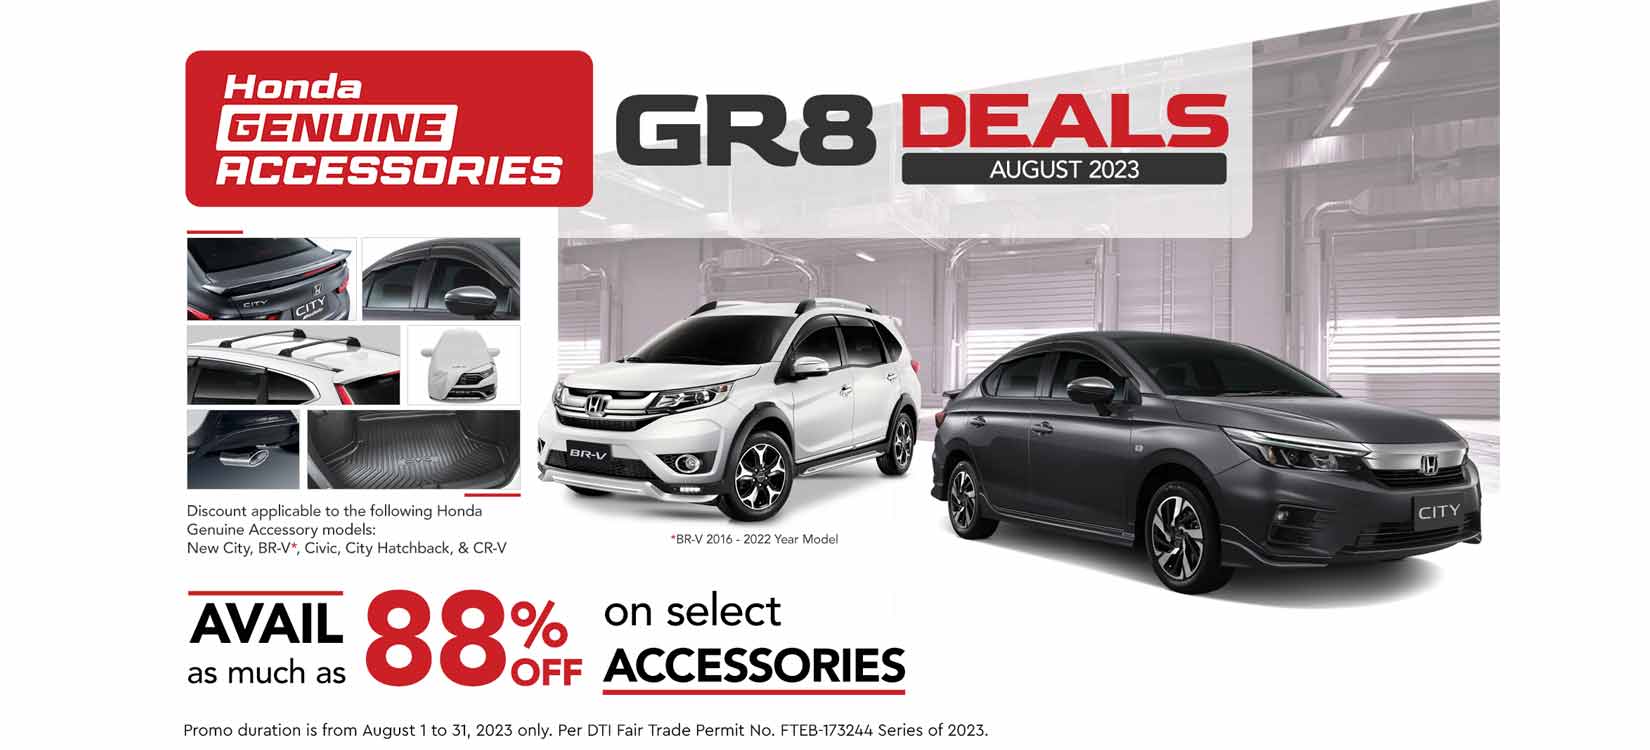 Score GR8 deals this August on Honda Genuine Accessories